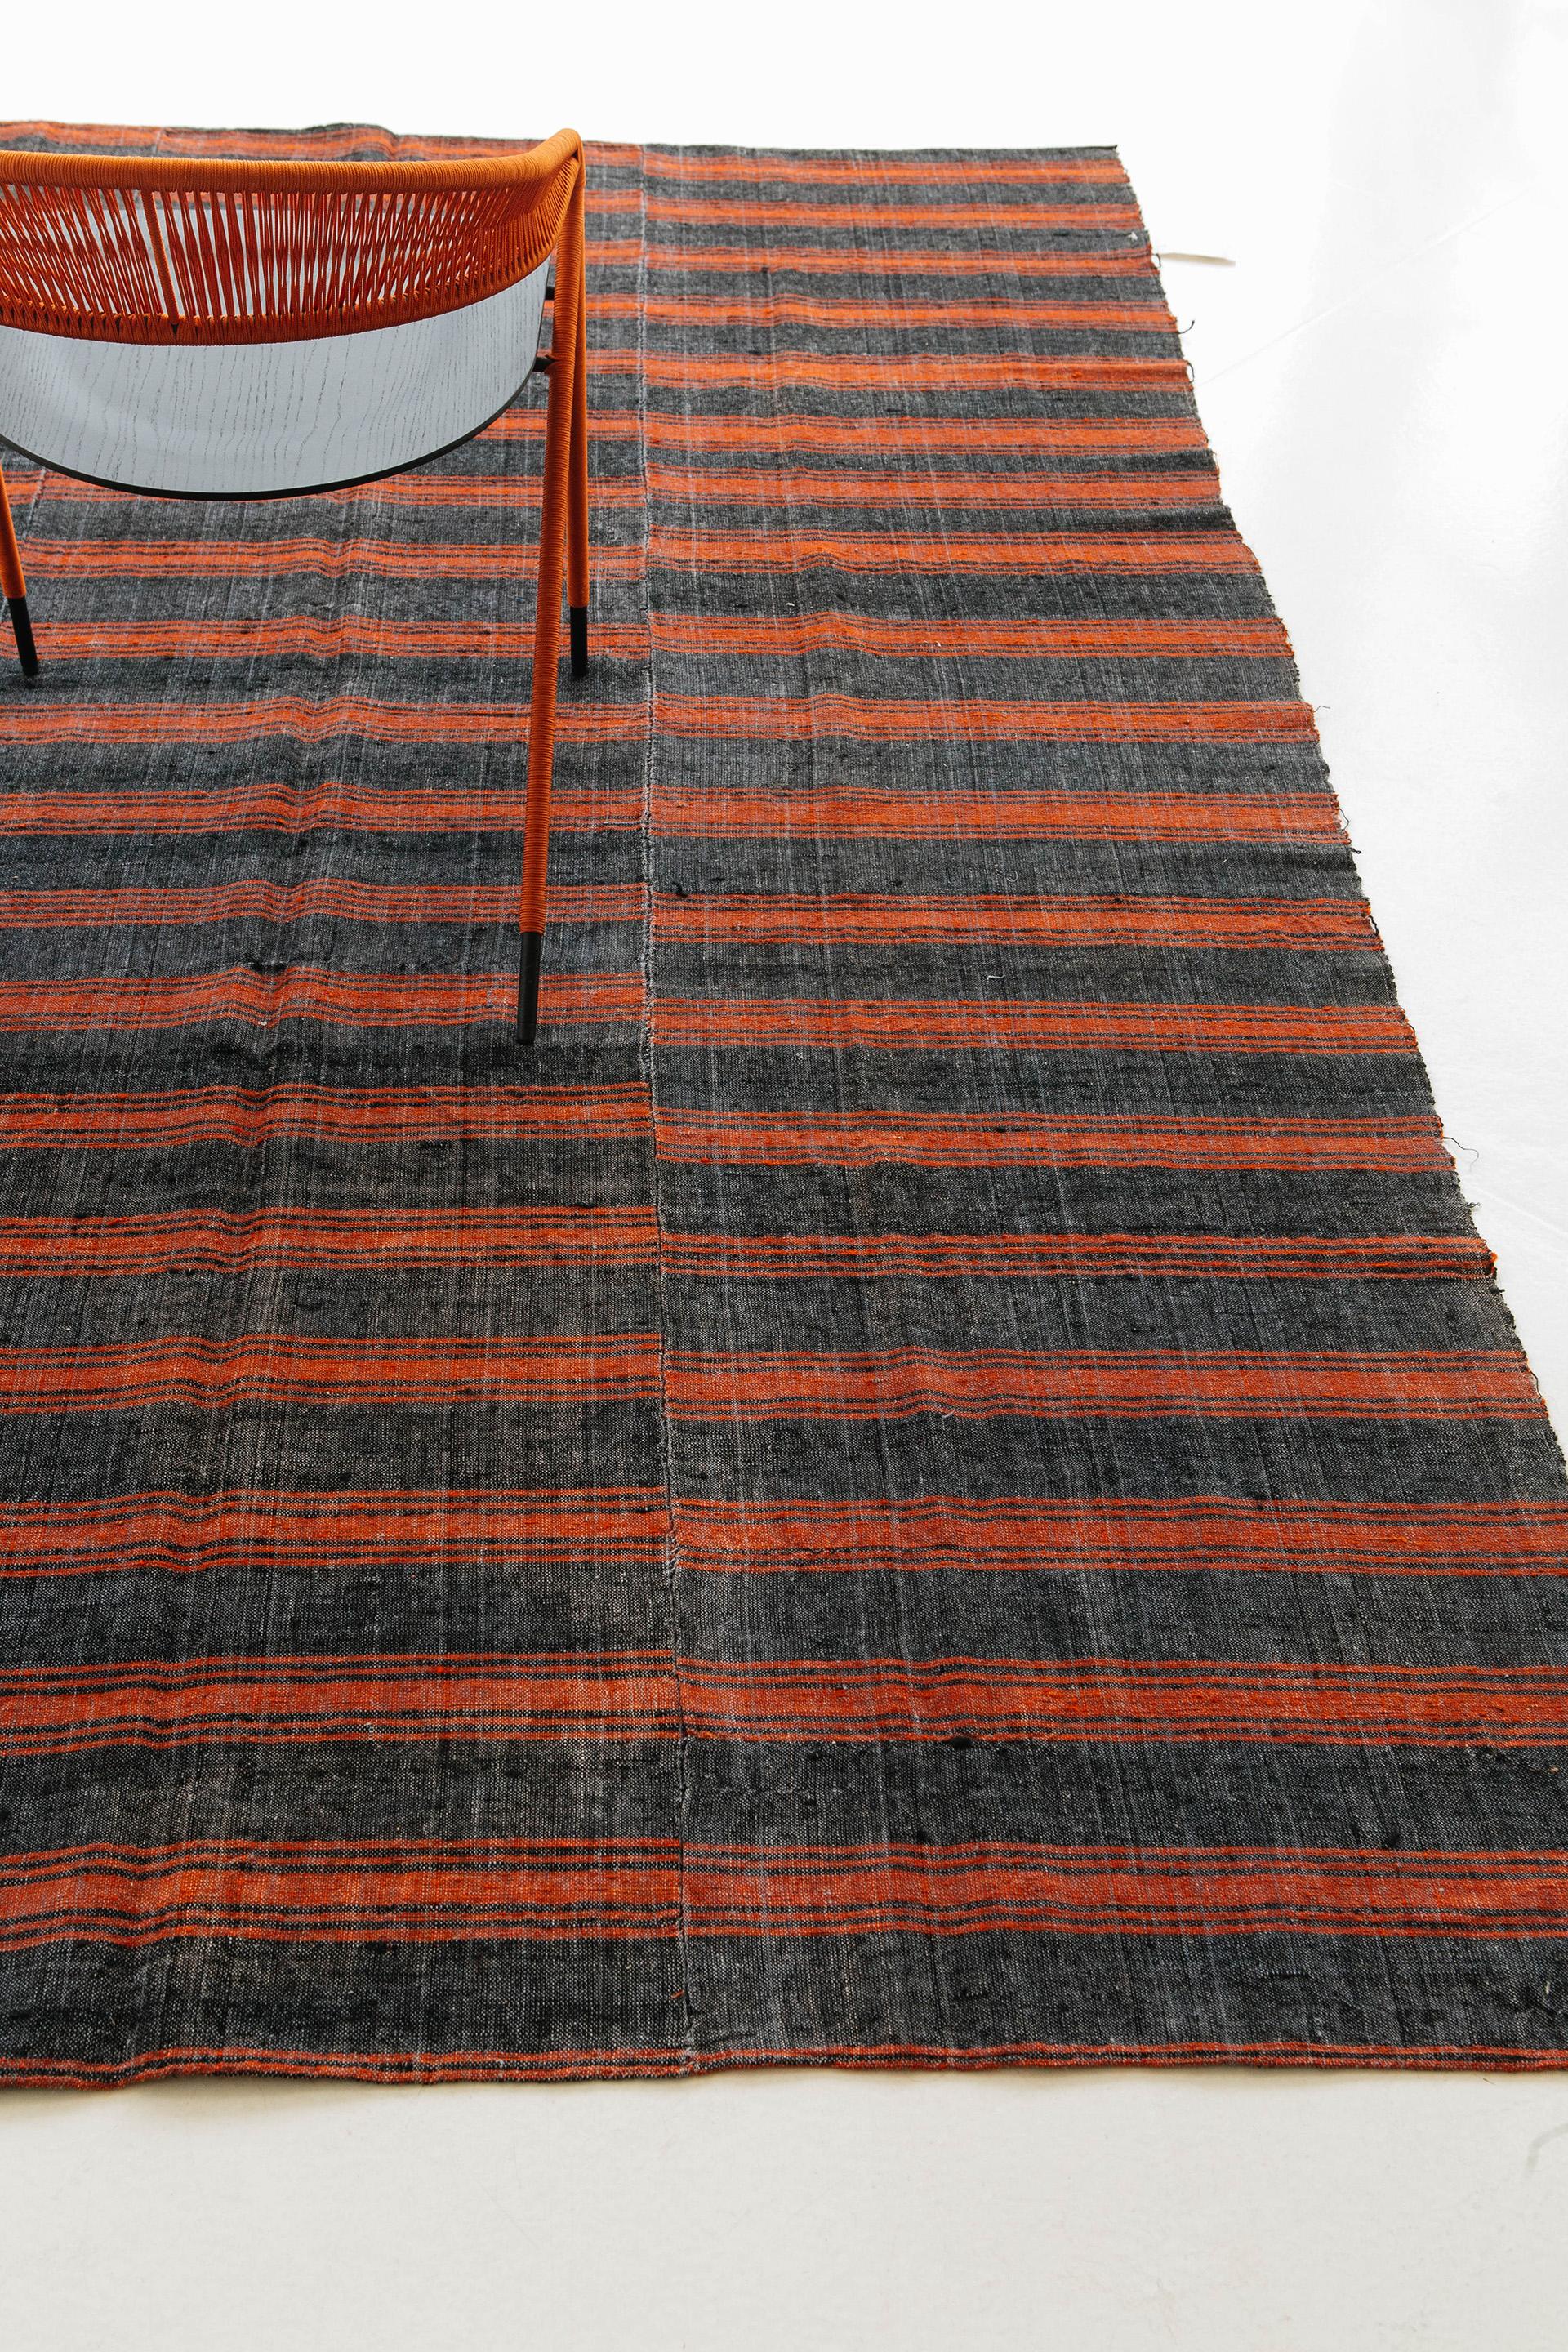 Contemporary Mehraban Turkish Tisse Kilim Flat Weave Rug For Sale